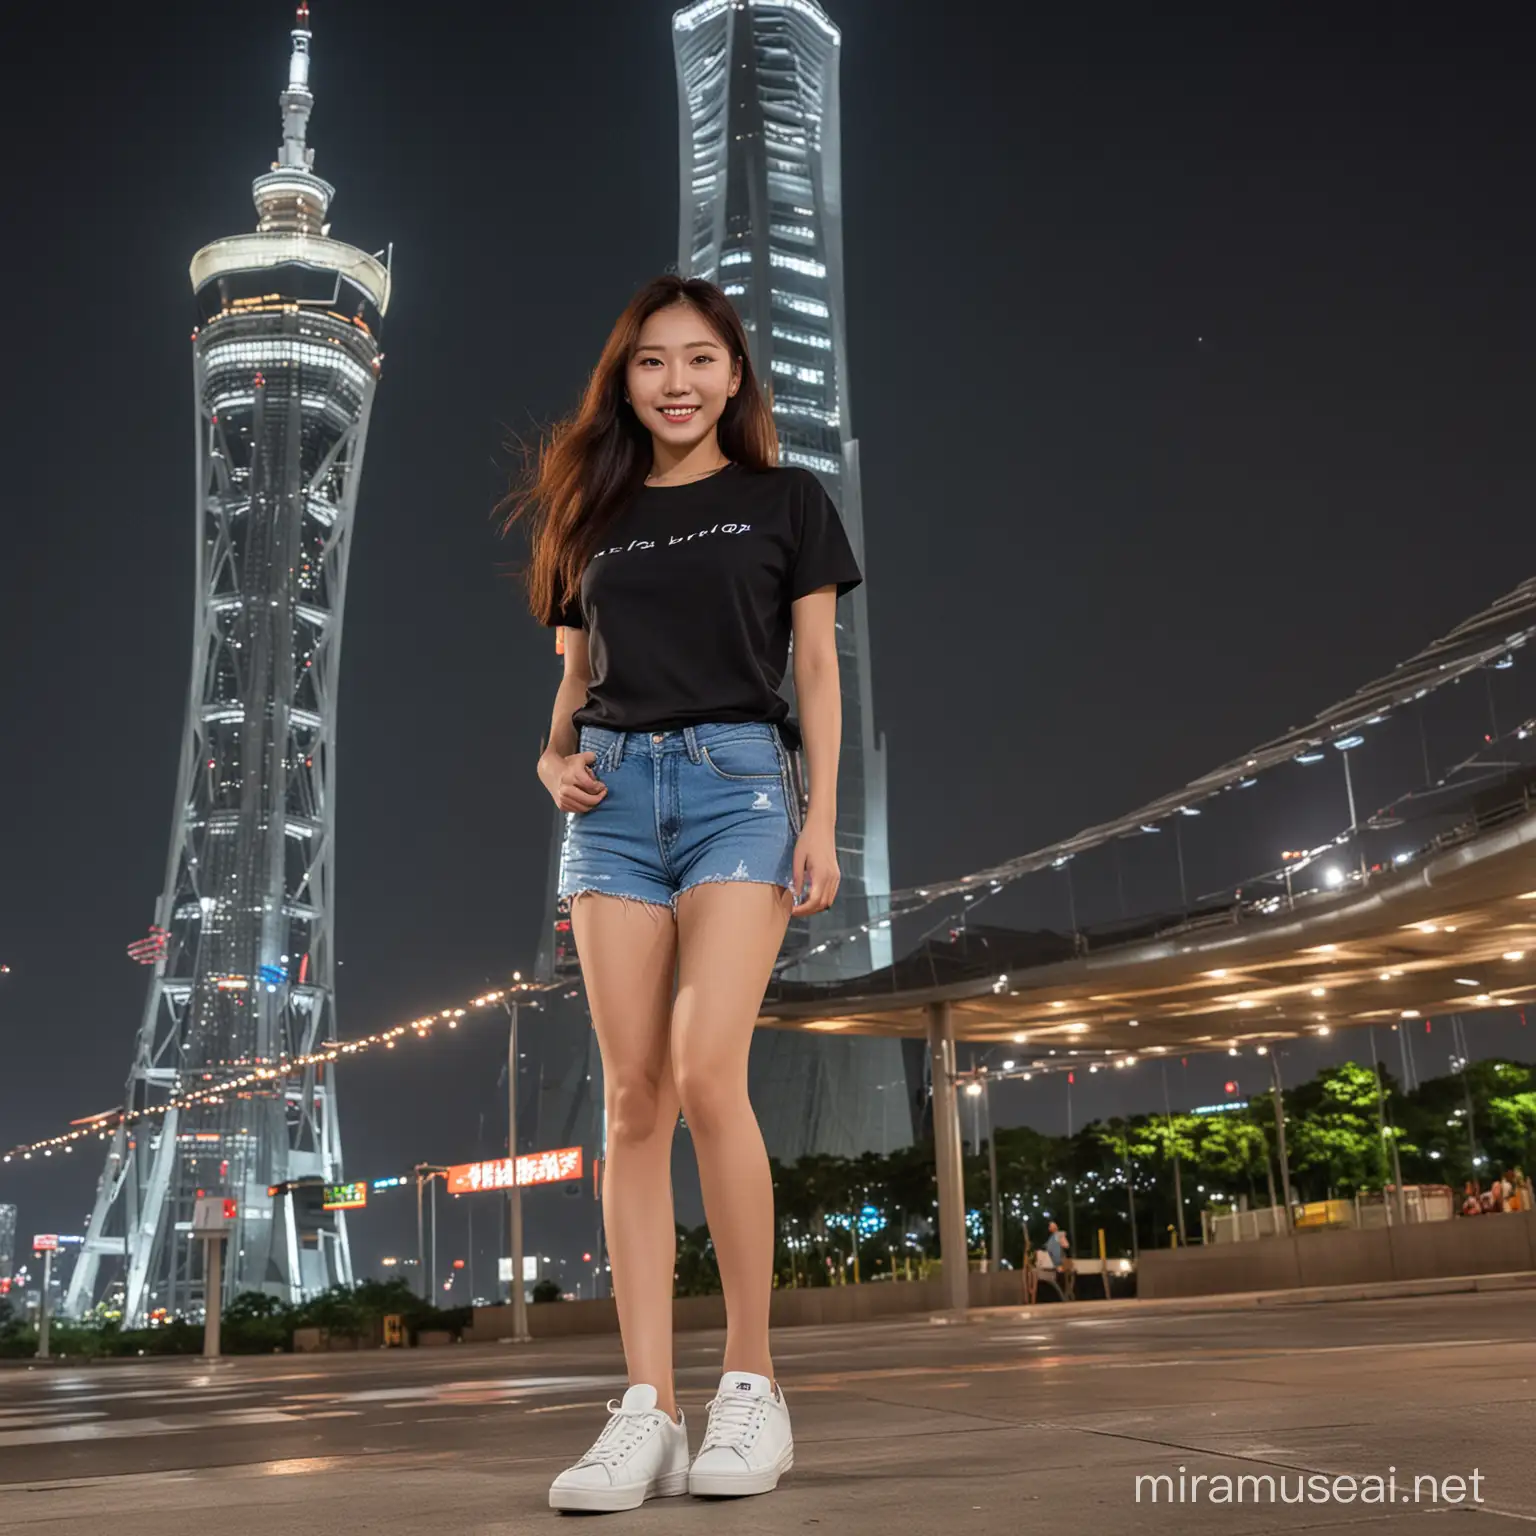 Stunning Korean Woman Poses under Taipei 101 Tower at Night